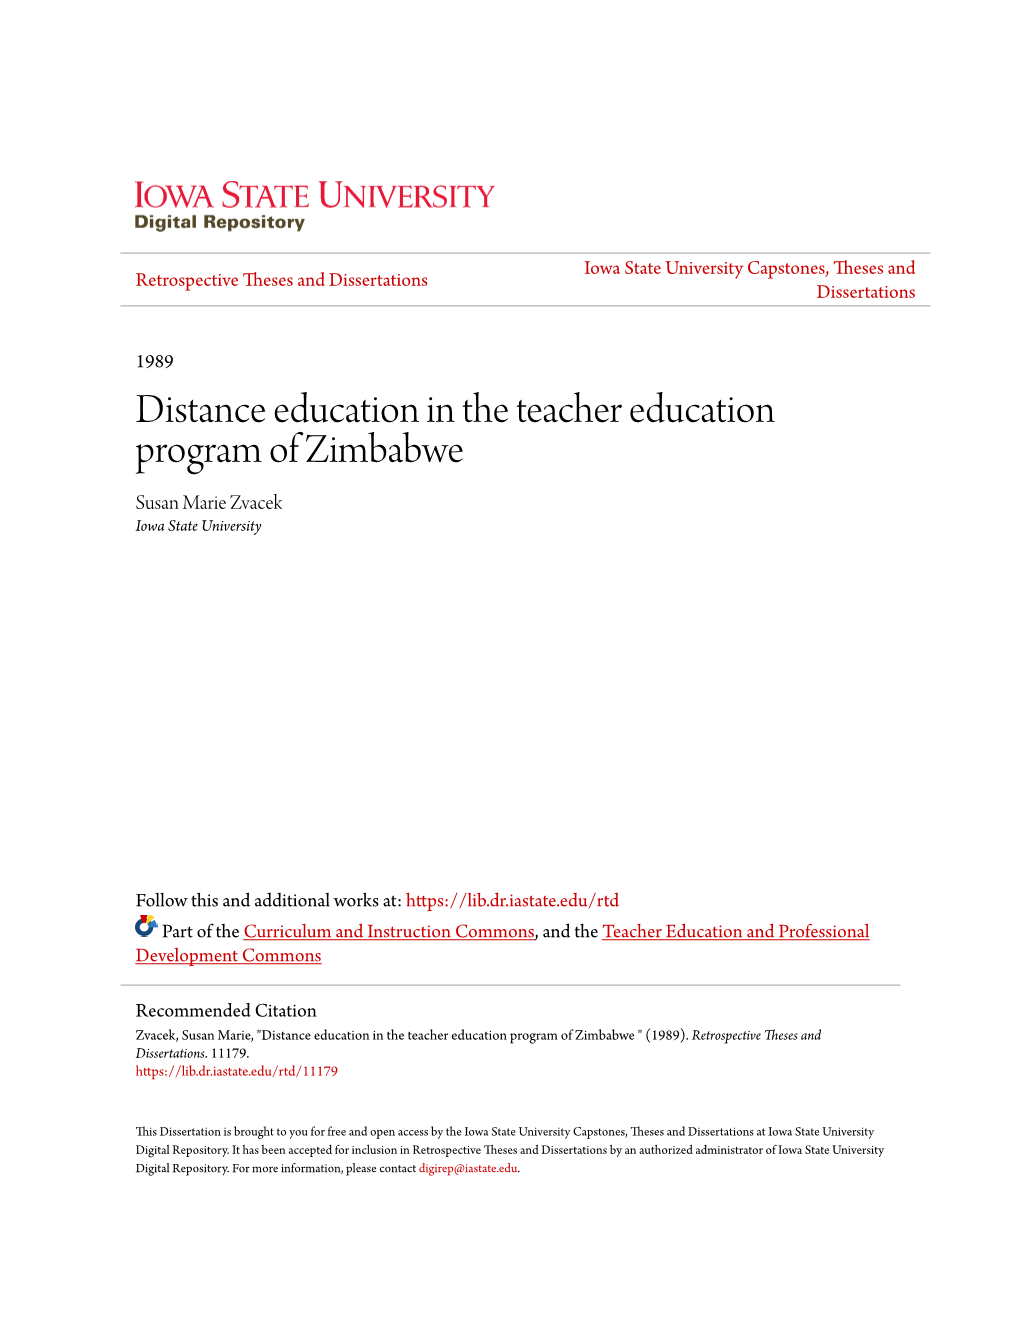 Distance Education in the Teacher Education Program of Zimbabwe Susan Marie Zvacek Iowa State University